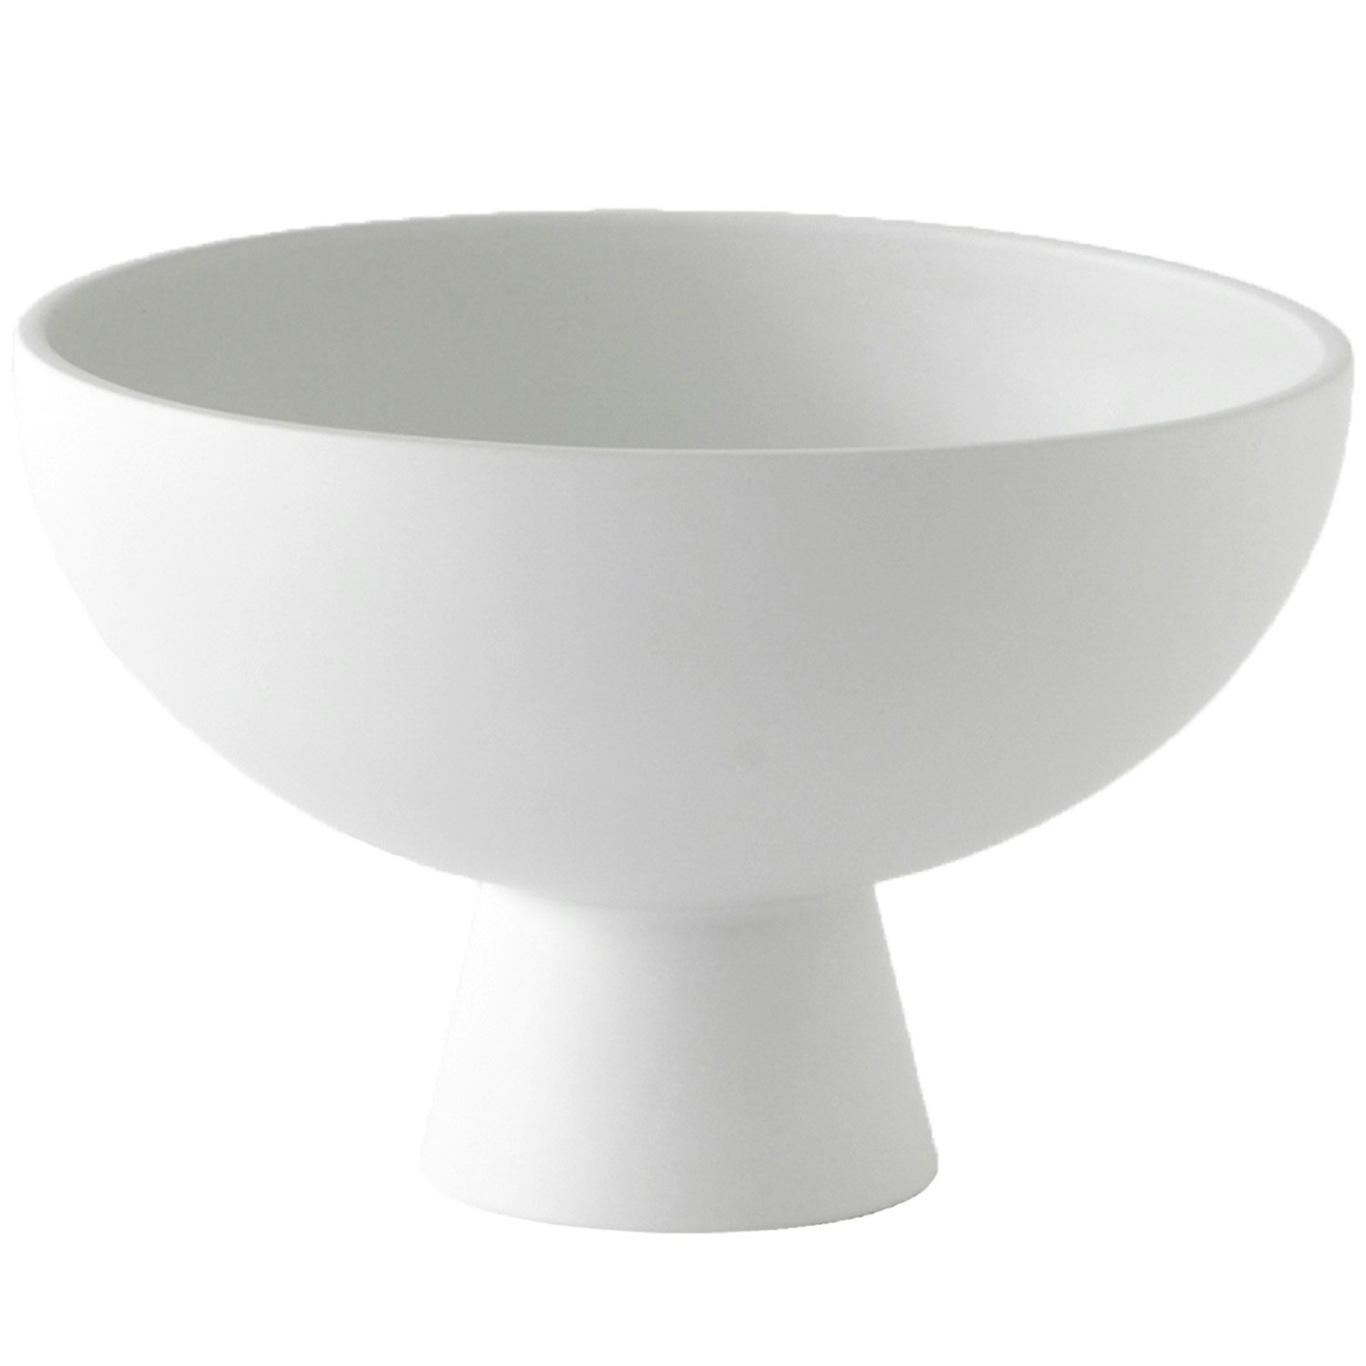 Strøm Bowl With Foot Ø15 cm, Vaporous Grey